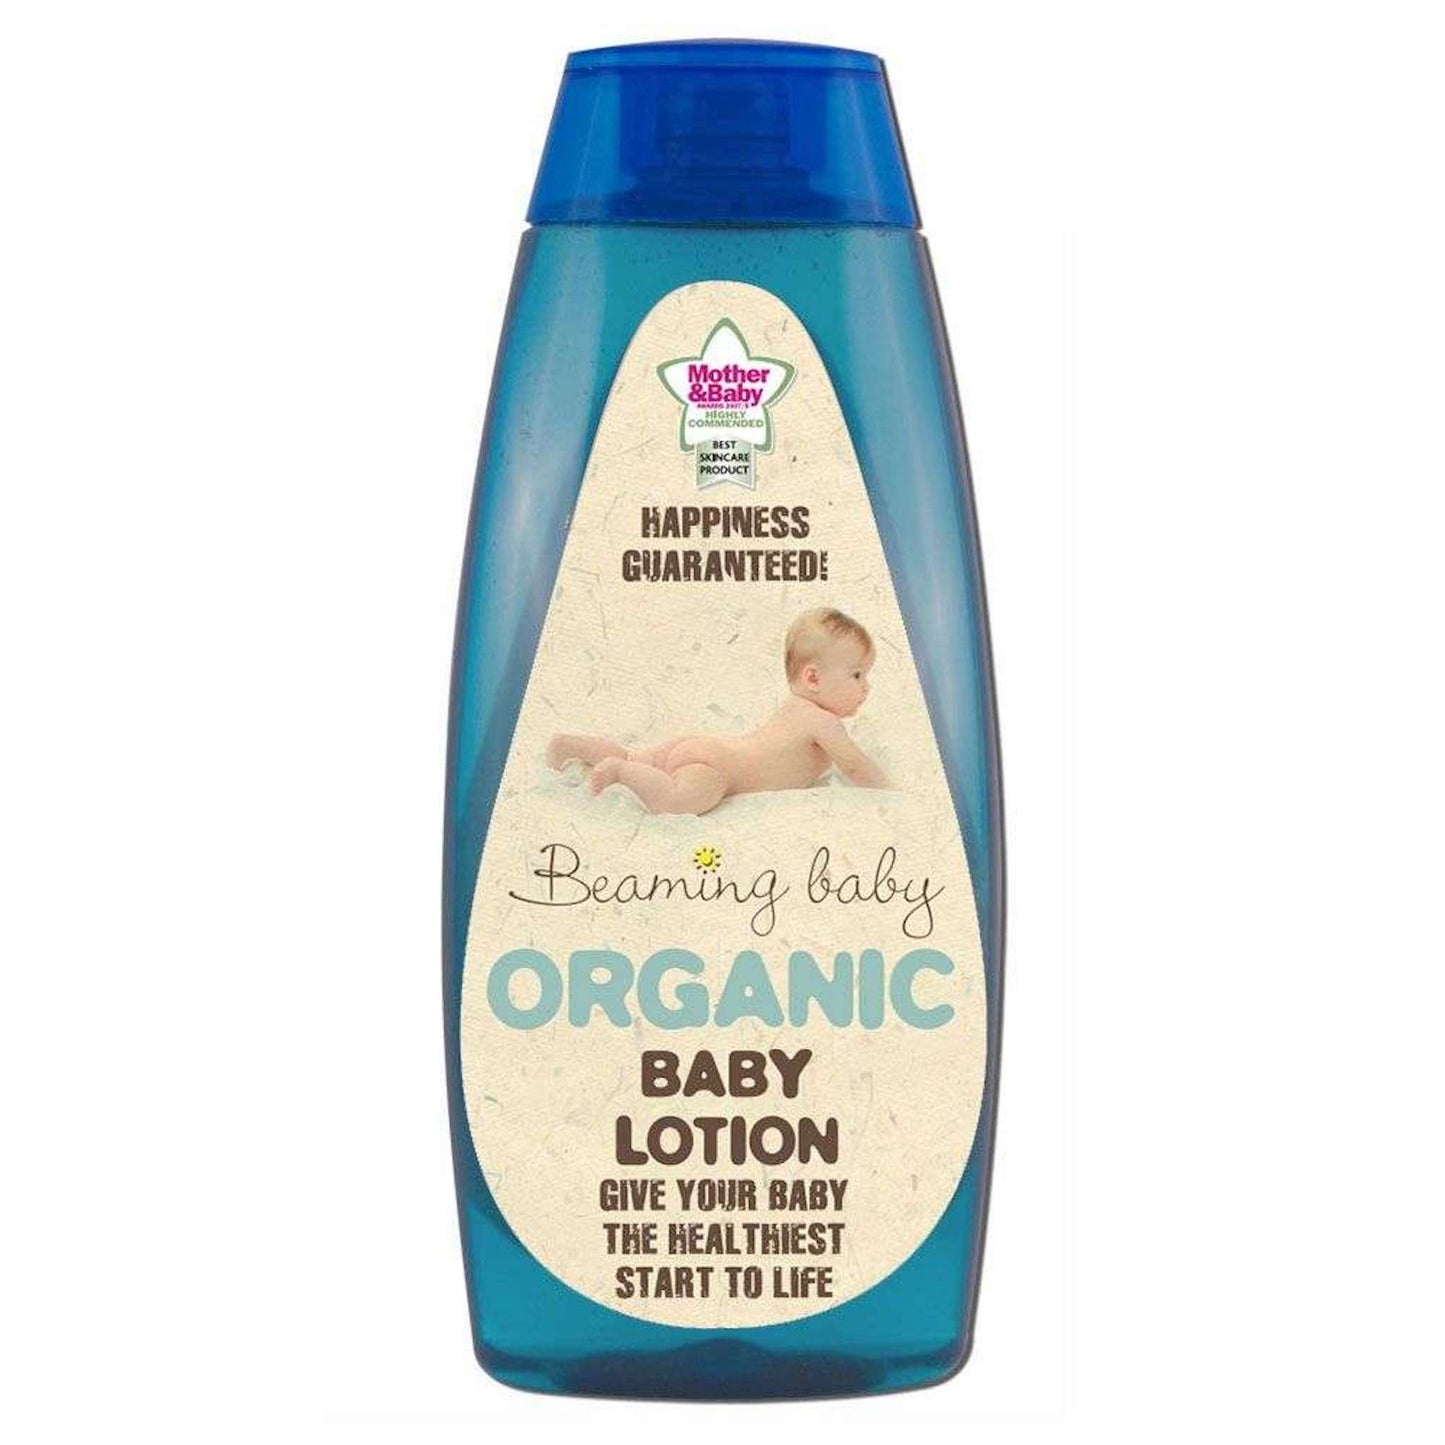 Beaming Baby Organic Baby Lotion